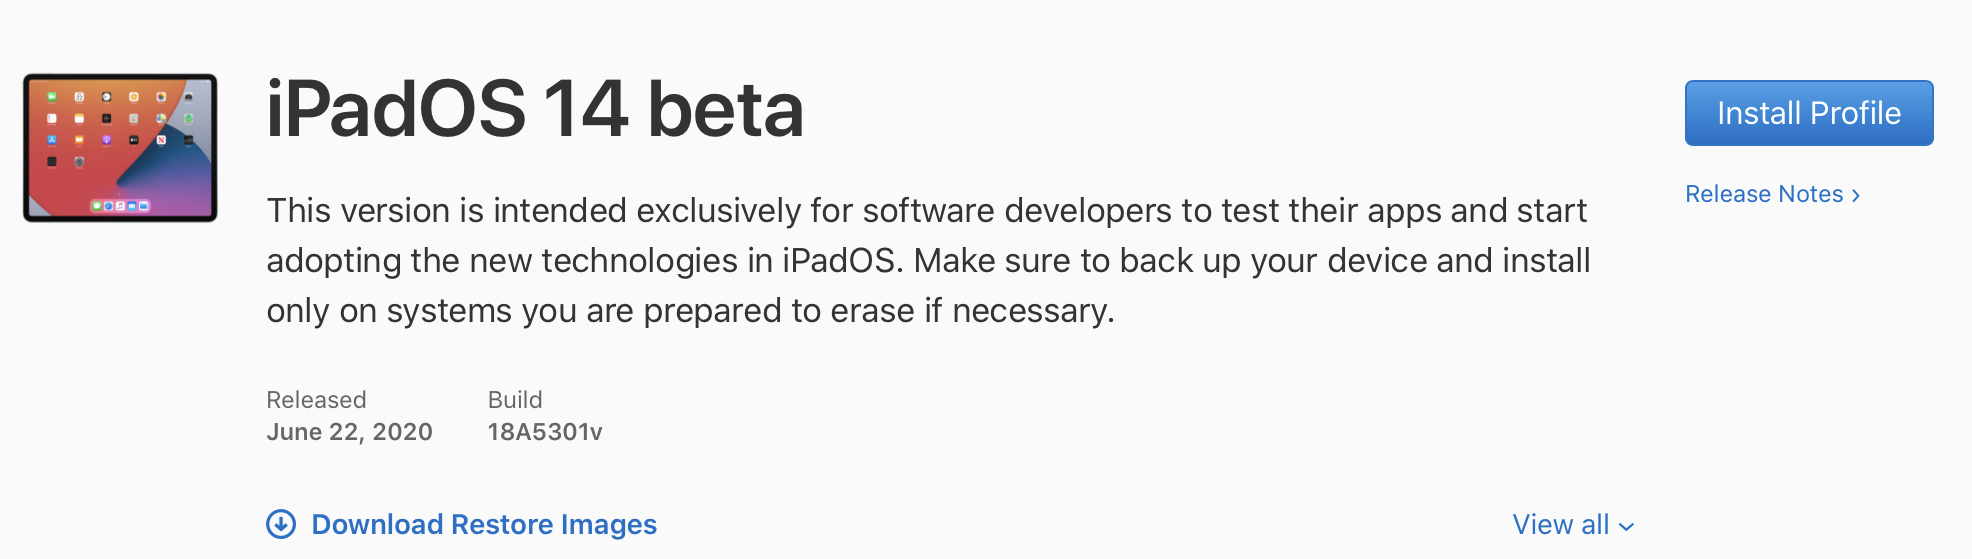 How to Download & Install iPadOS 14 Developer Beta on iPad